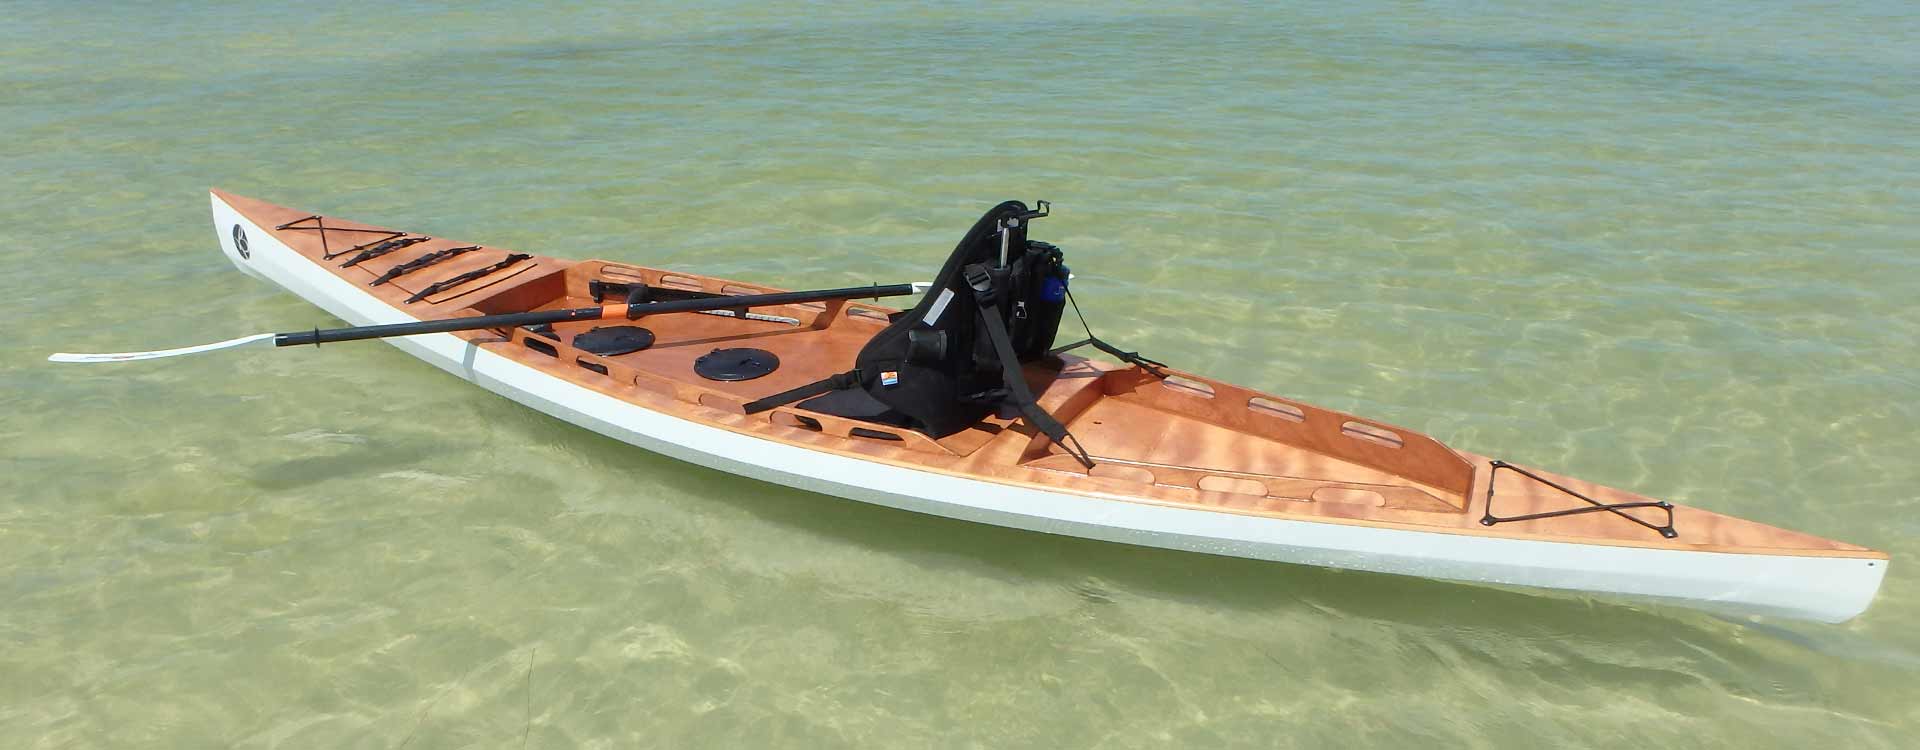 F1430 Fishing kayak | Bedard Yacht Design